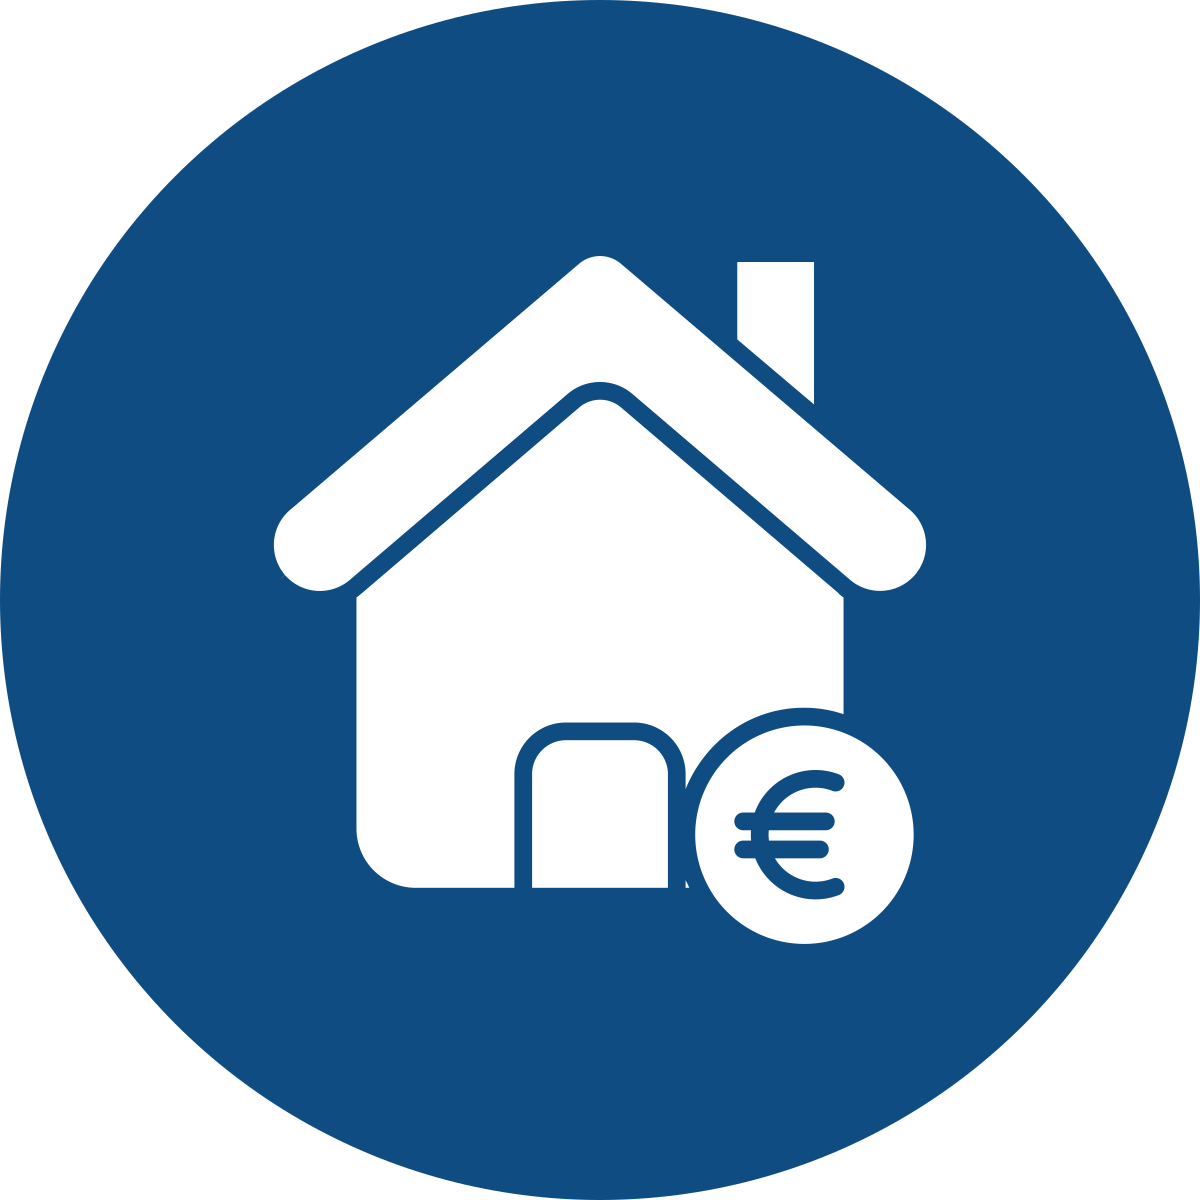 Maison, symbole euro